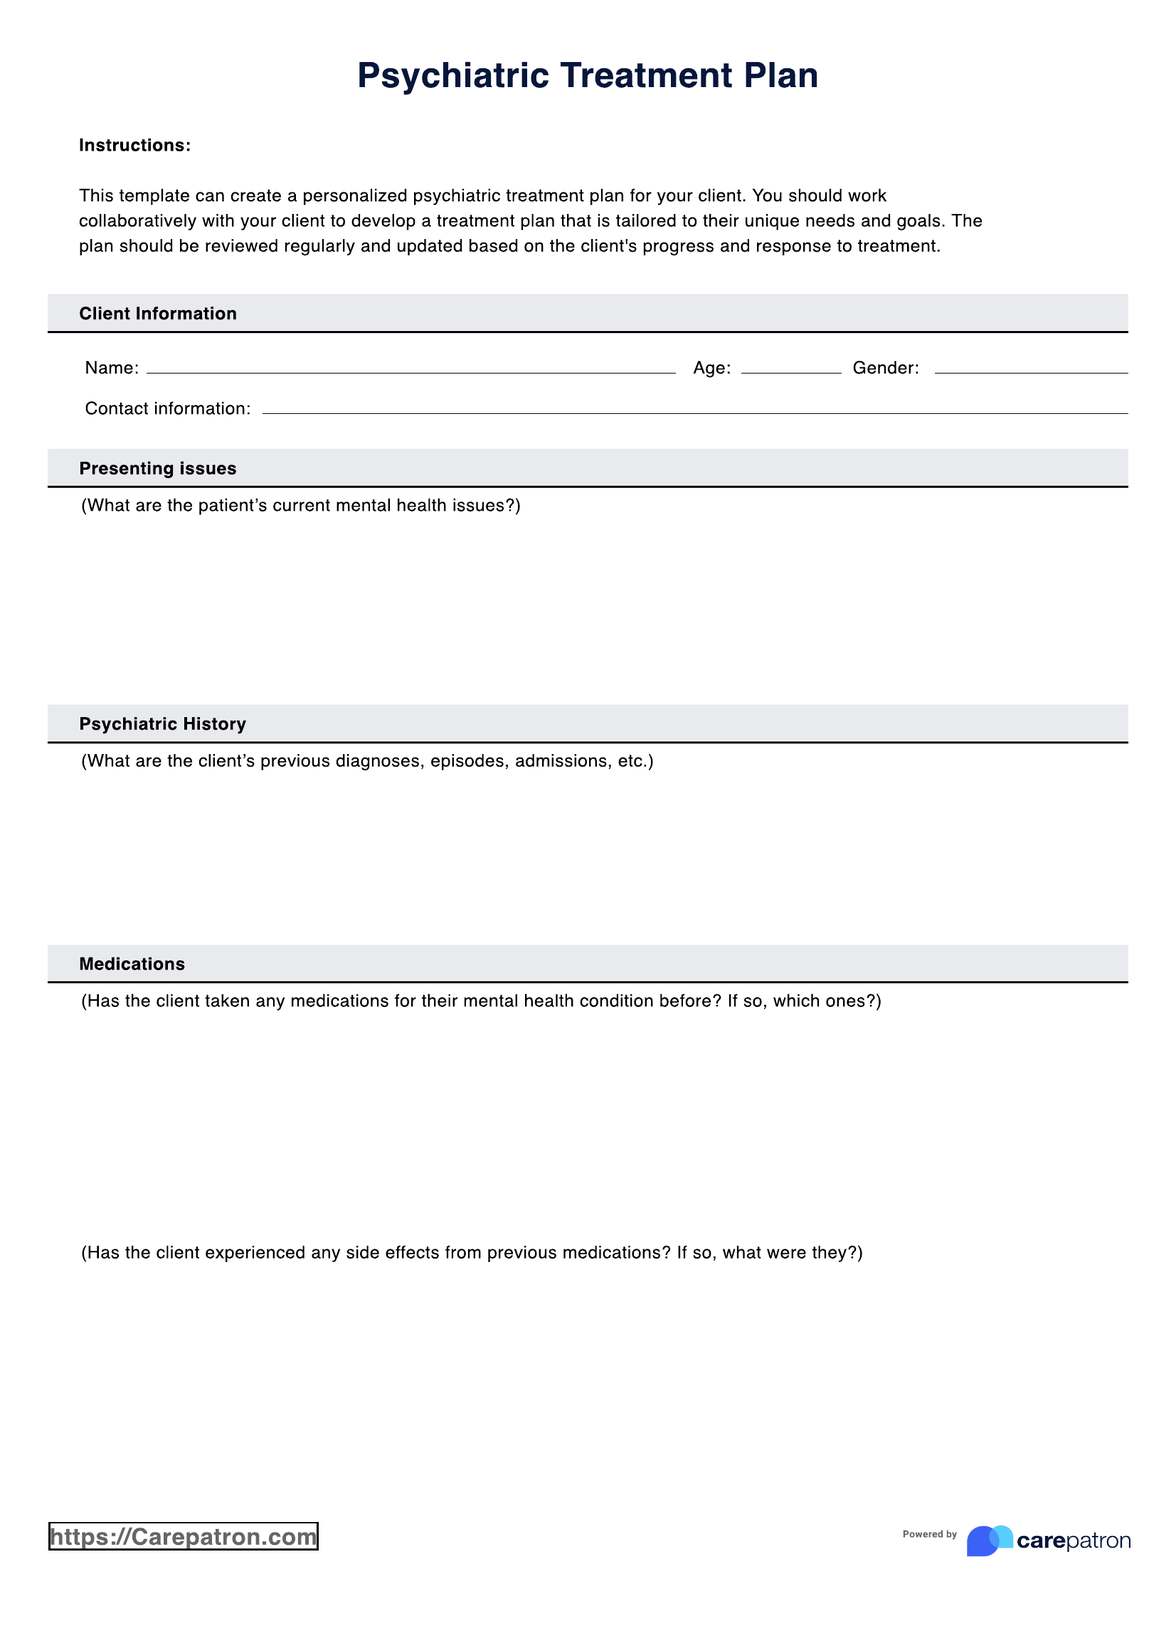 Psychiatric Treatment Plan PDF Example